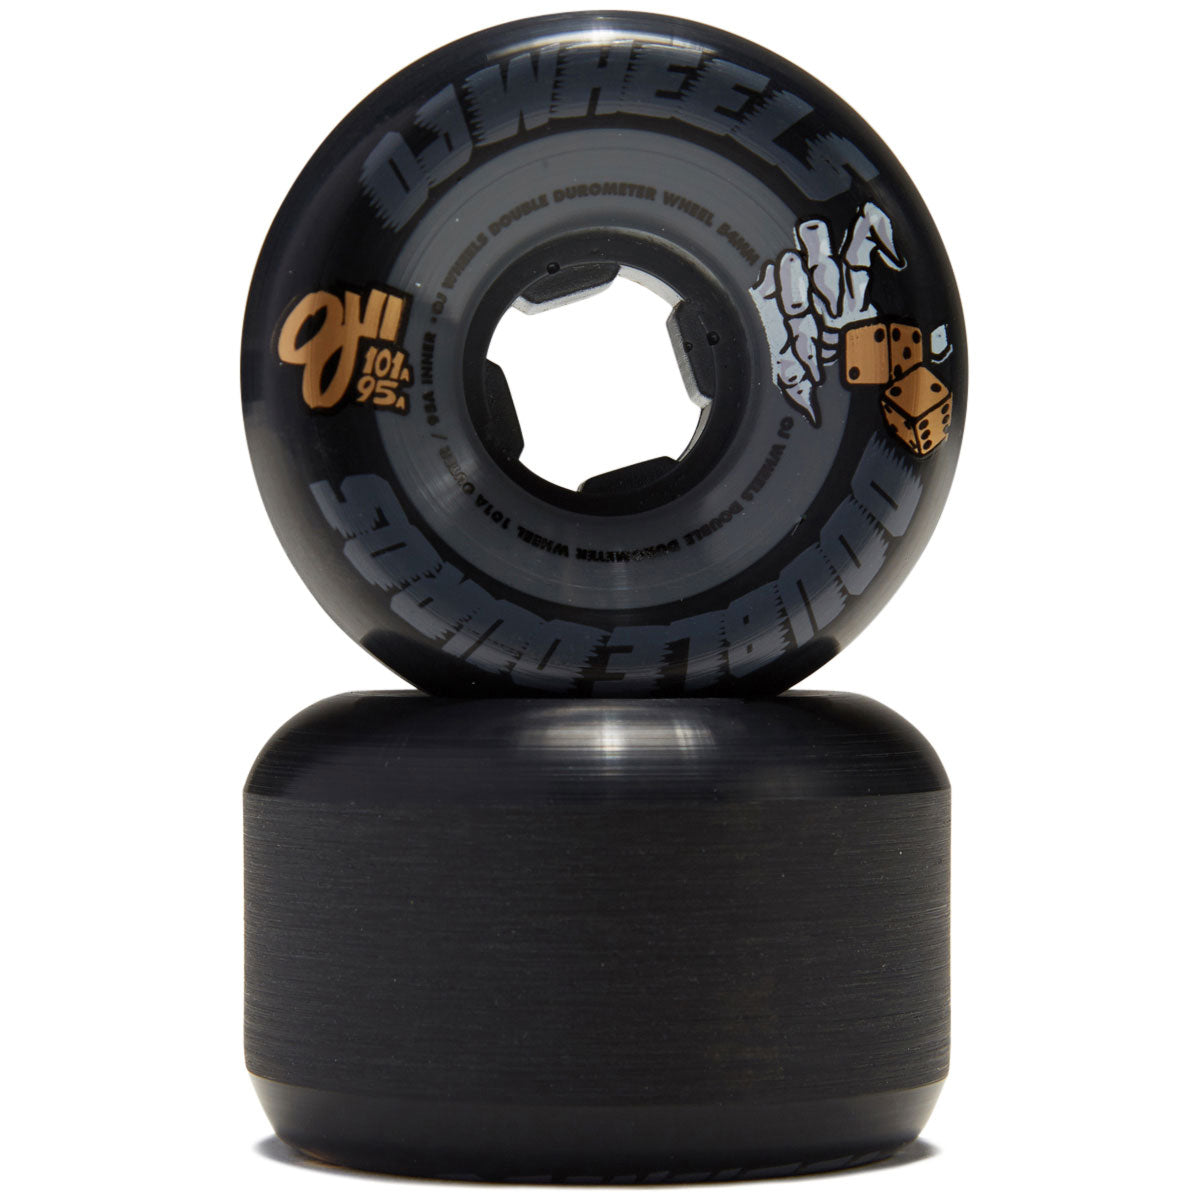 OJ Double Duro 101a/95a Skateboard Wheels - Black/Grey - 54mm image 2